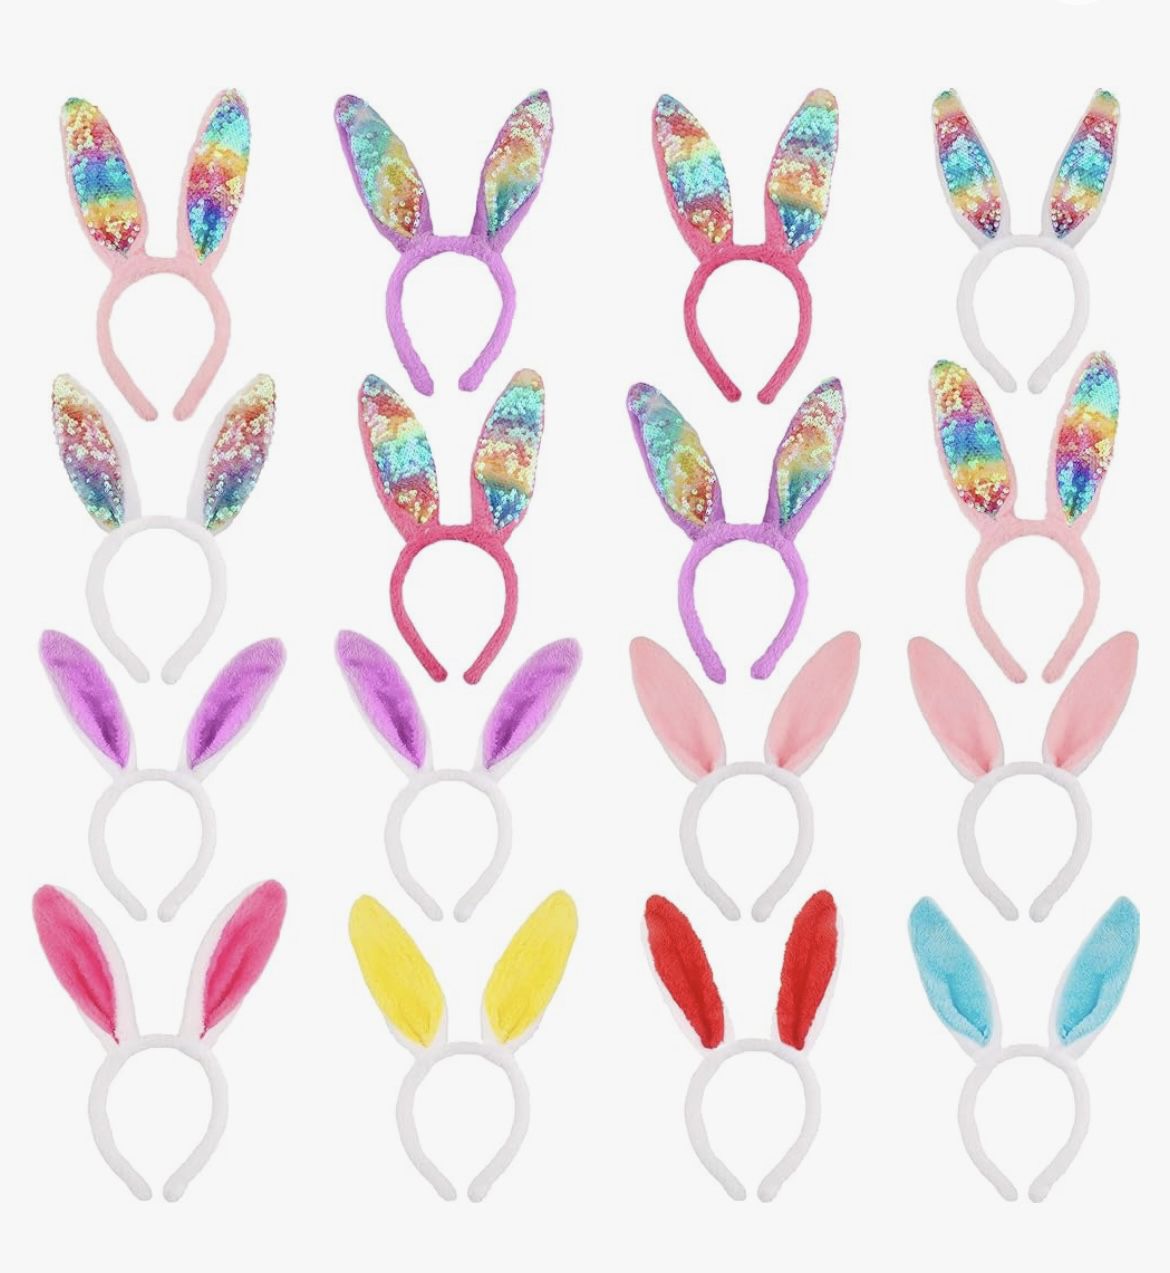 30 Pieces Easter Bunny Ear Headbands